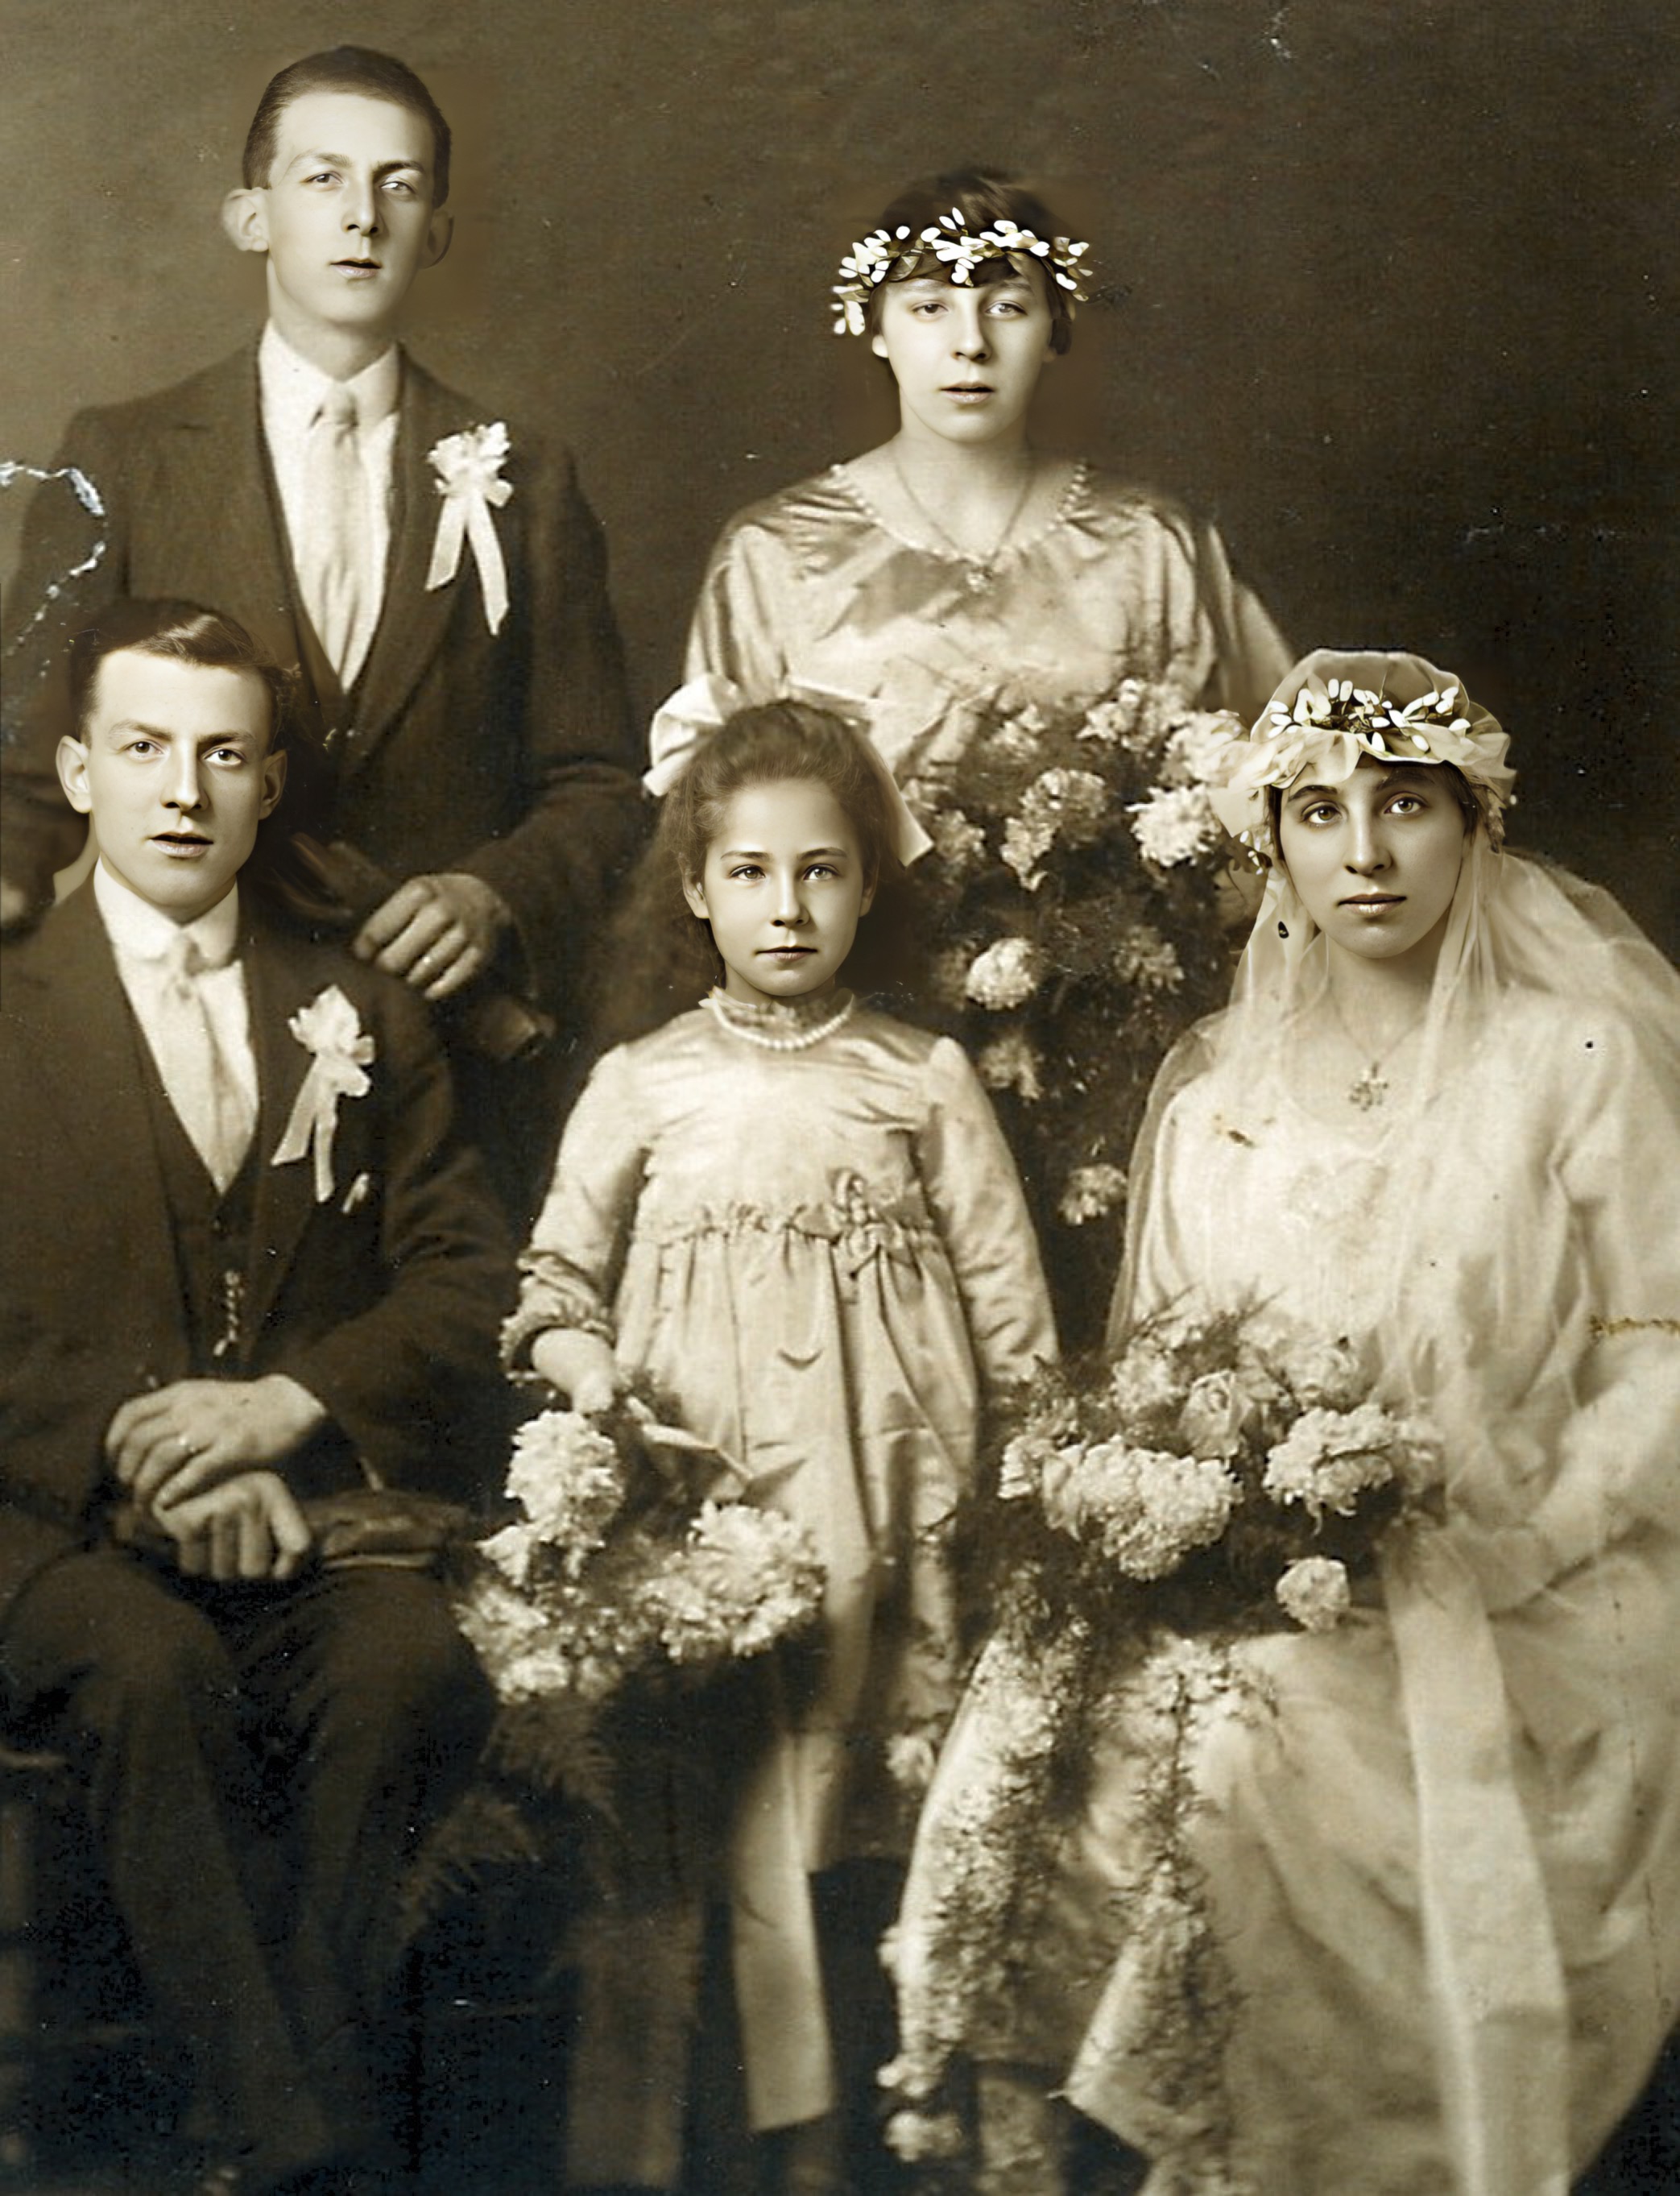 Euphemia and David’s wedding in 1921  Elizabeth flower girl joke best man christina brides maid